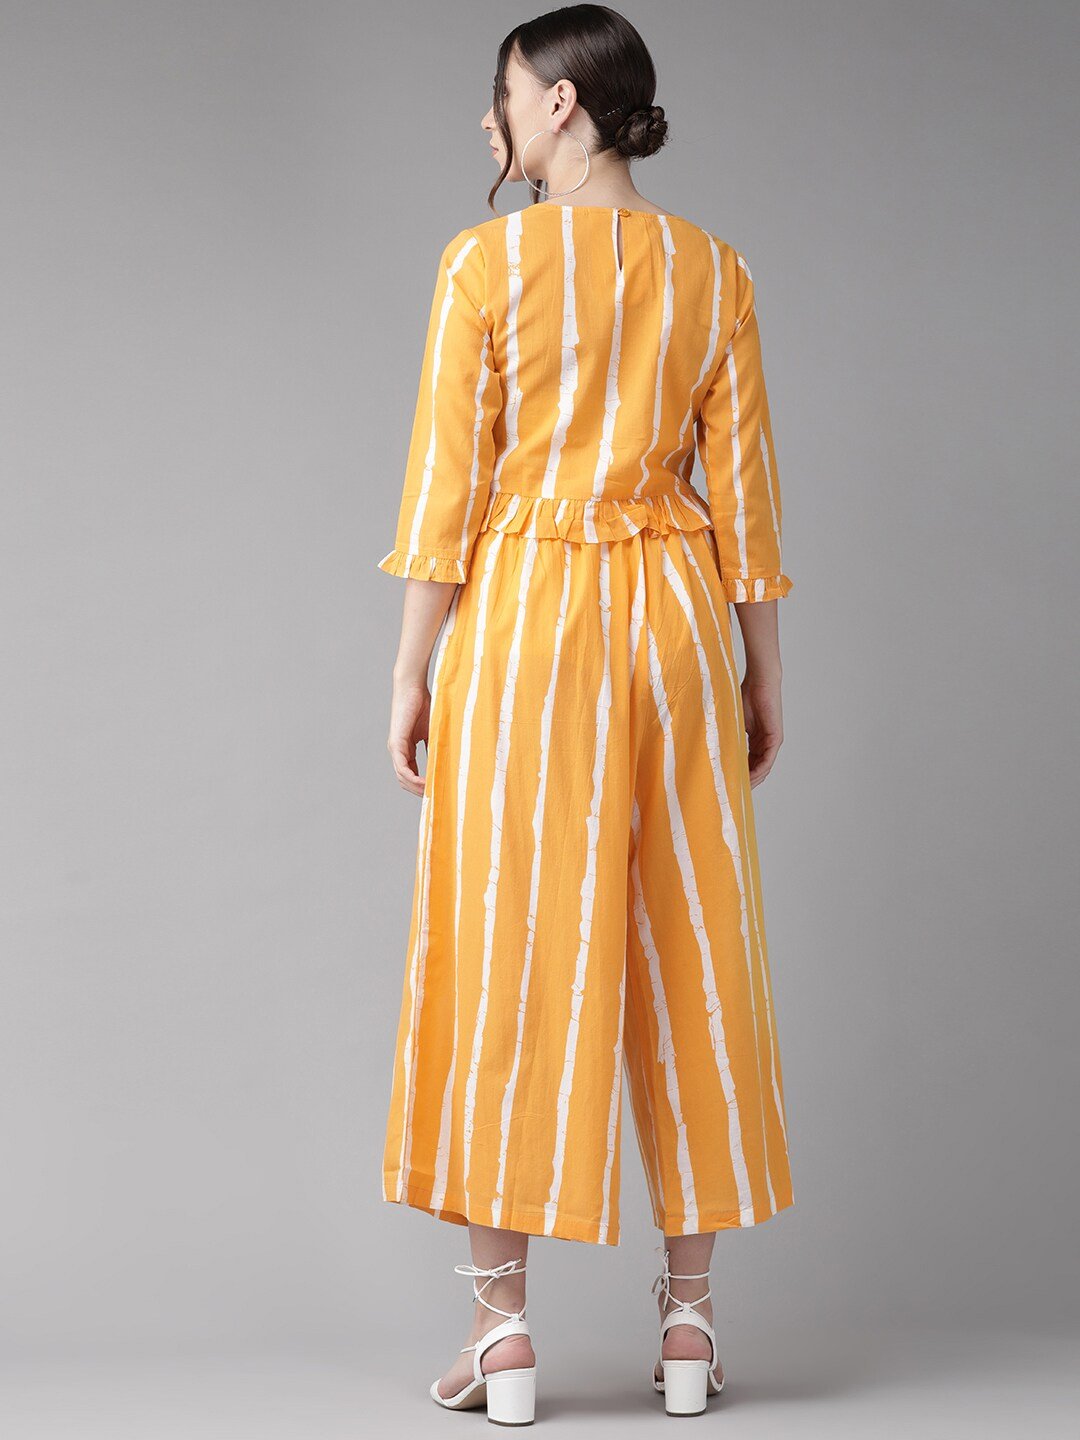 Women's  Mustard & White Striped Two-Piece Top & Palazzo Set - AKS